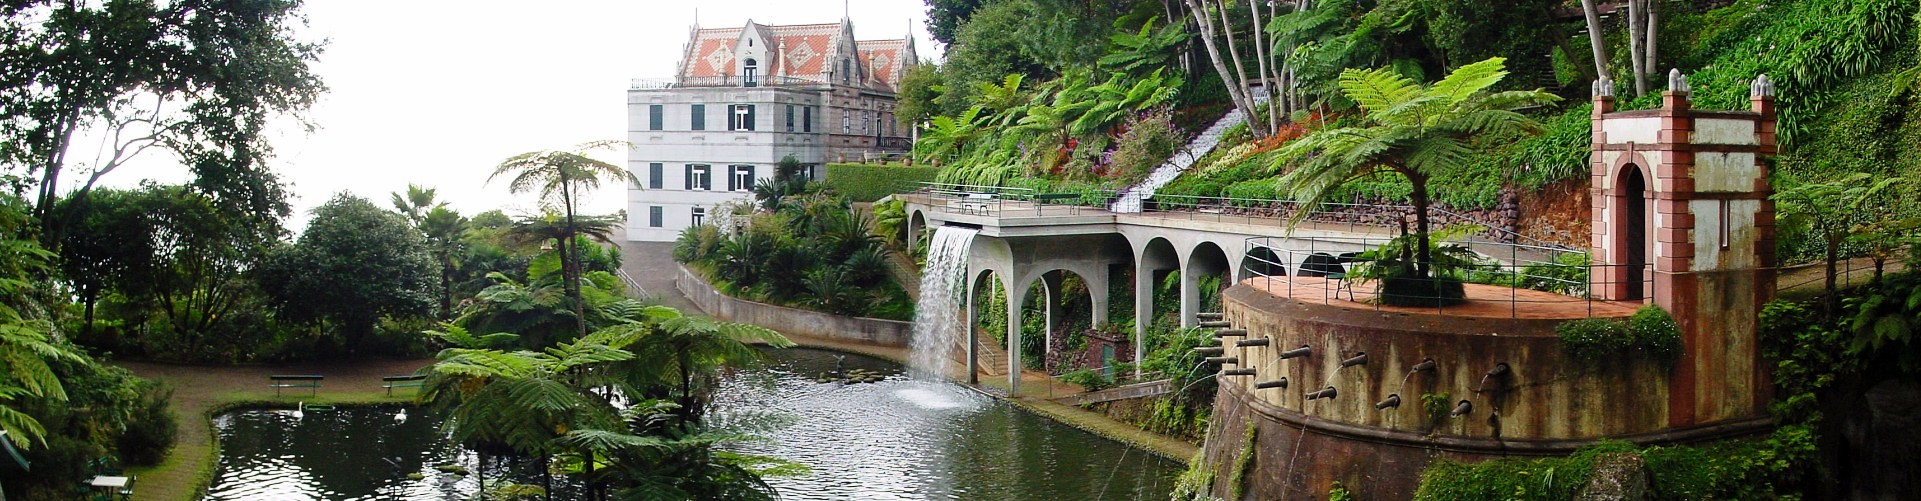 Monte Palace Tropical Garden in Madeira Island